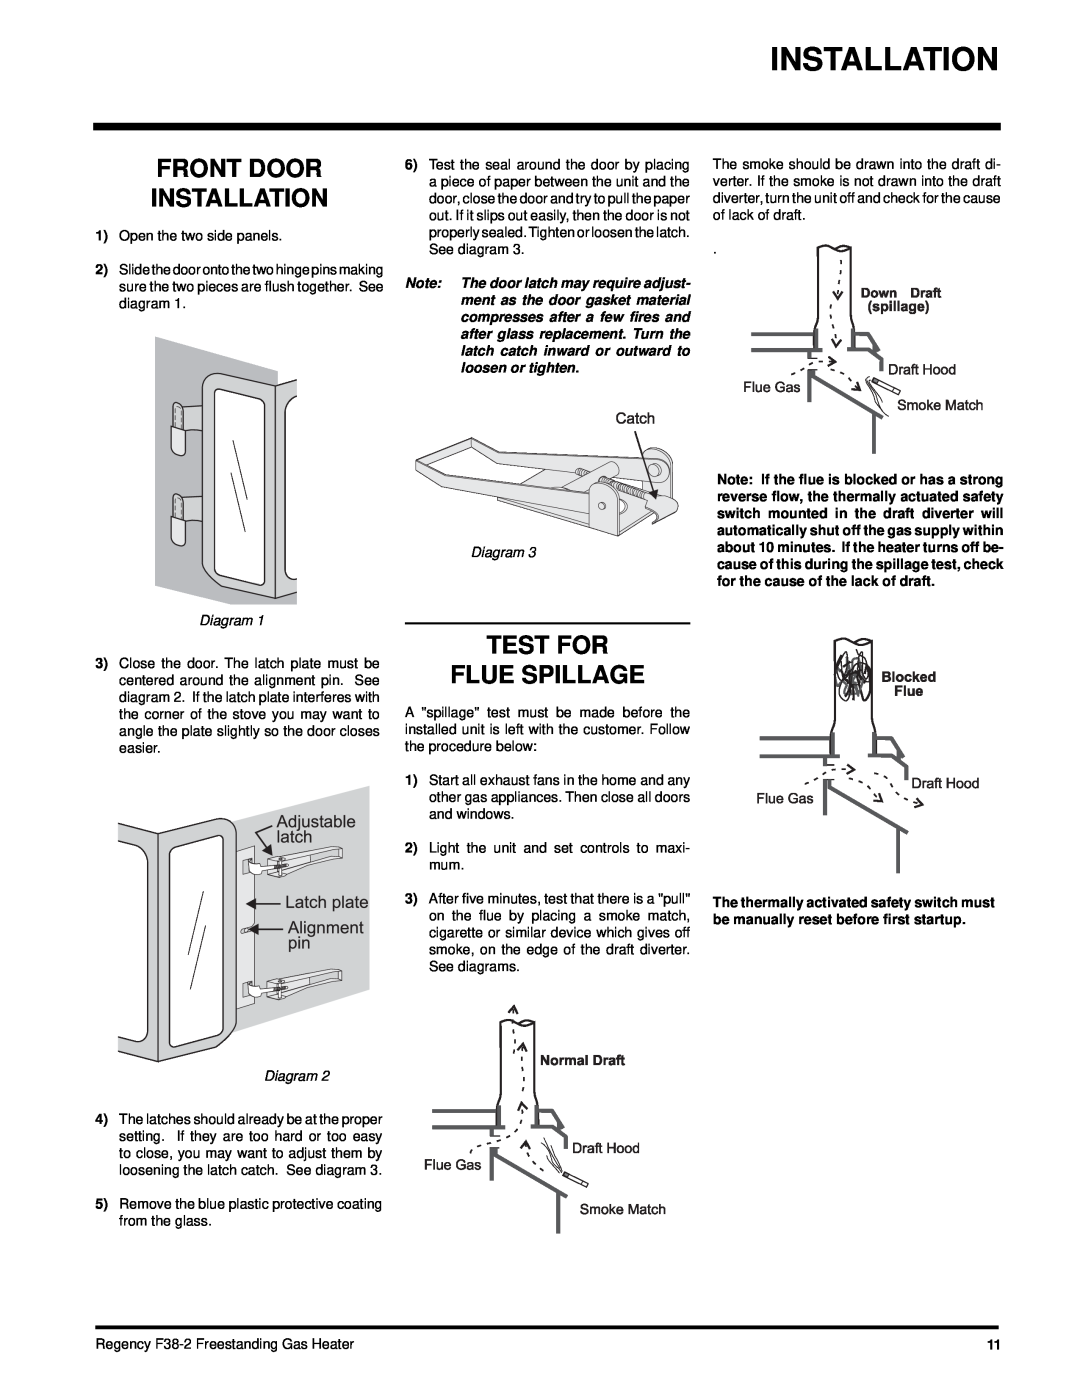 Regency F38-LPG2, F38-NG2 installation manual Front Door Installation, Test For Flue Spillage, Diagram 